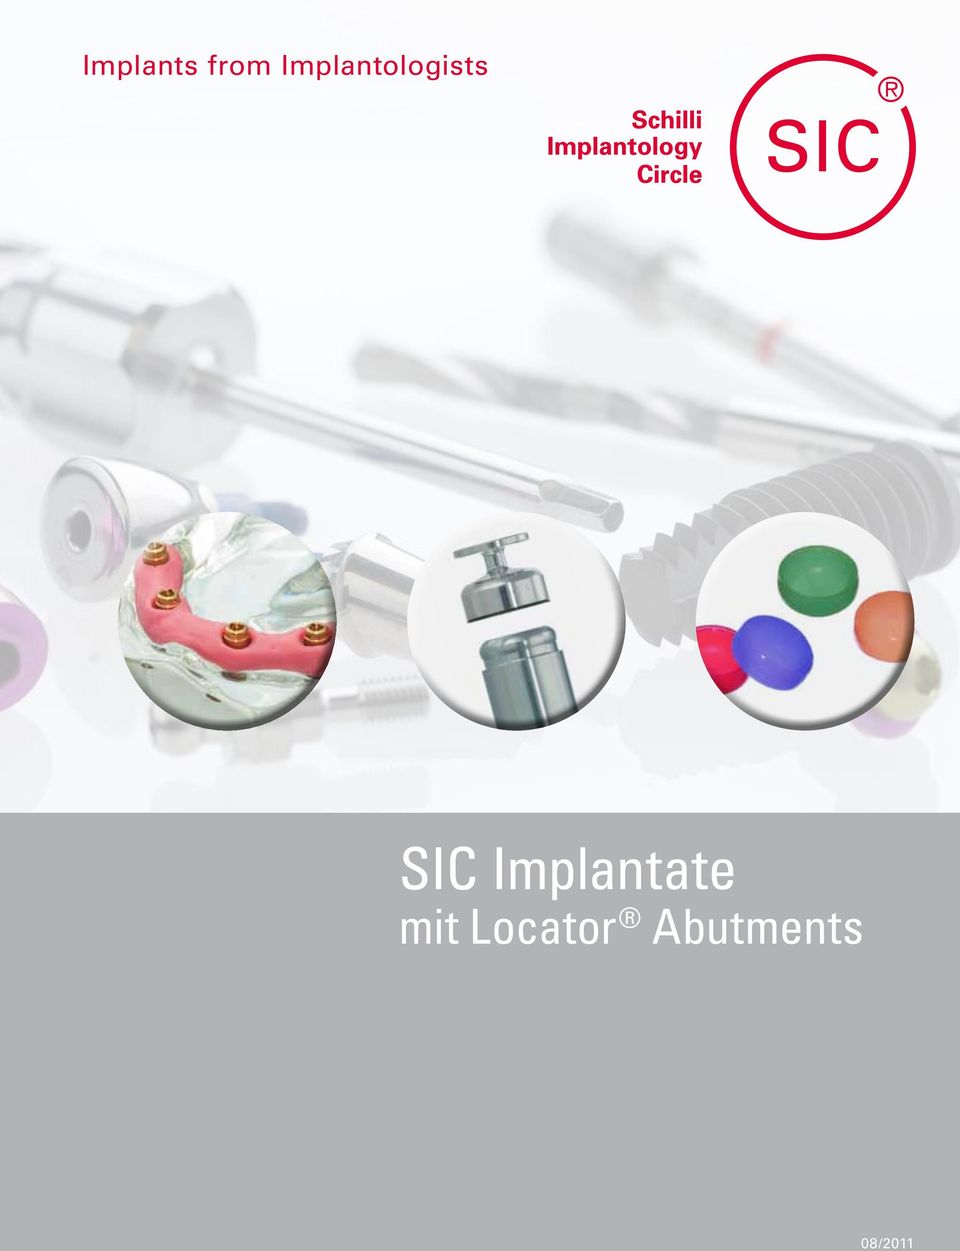 SIC Implantate mit